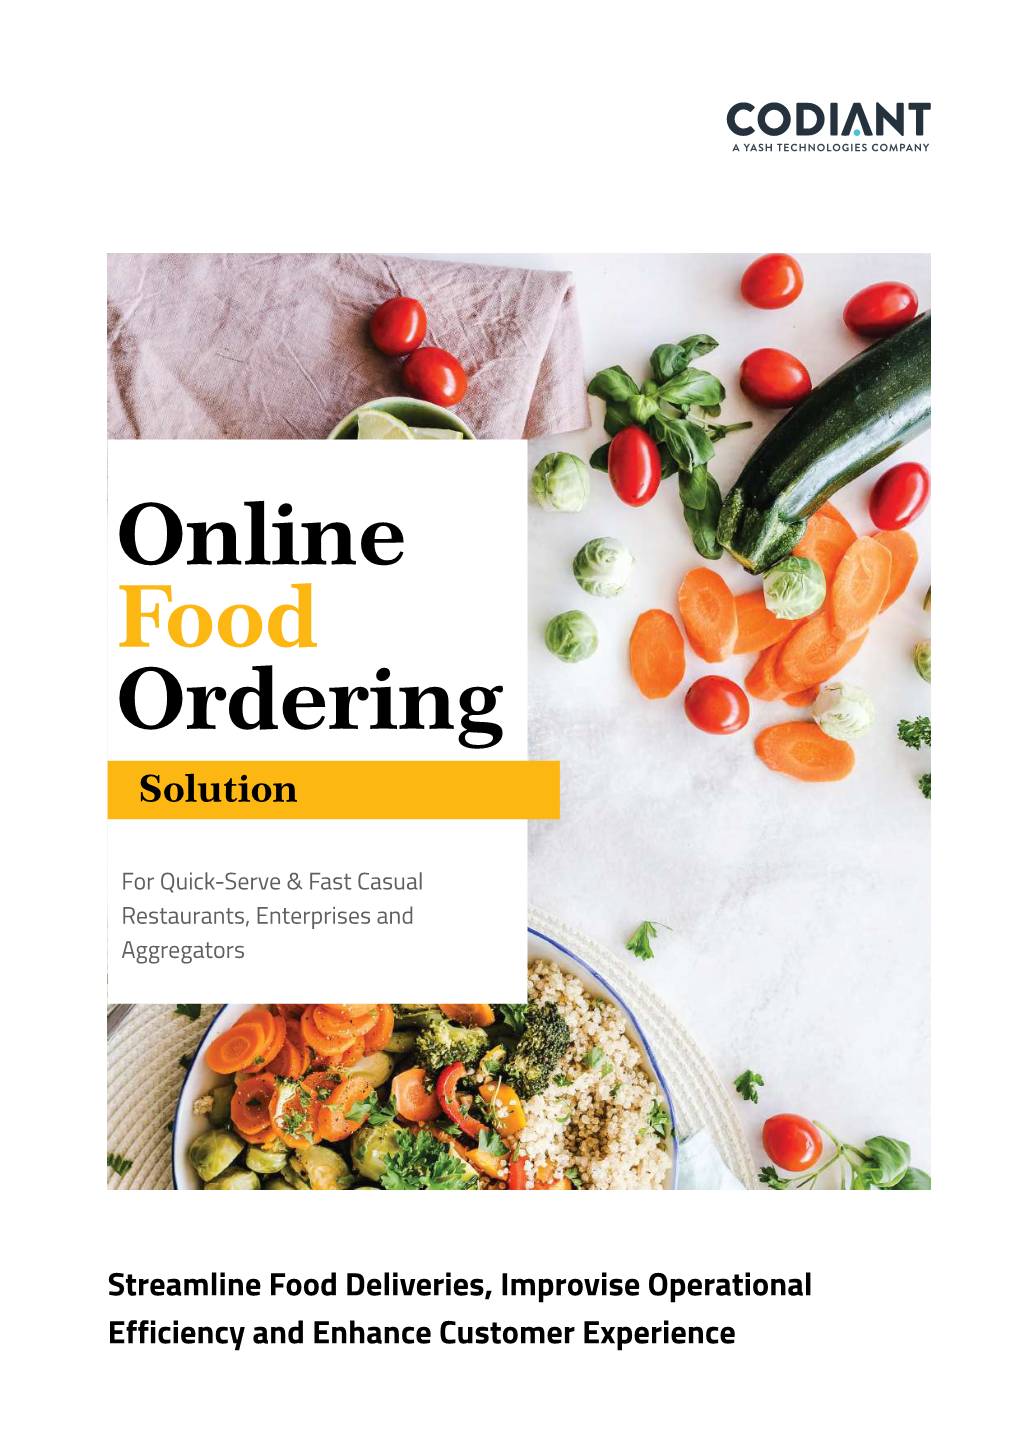 Online Food Ordering Solution